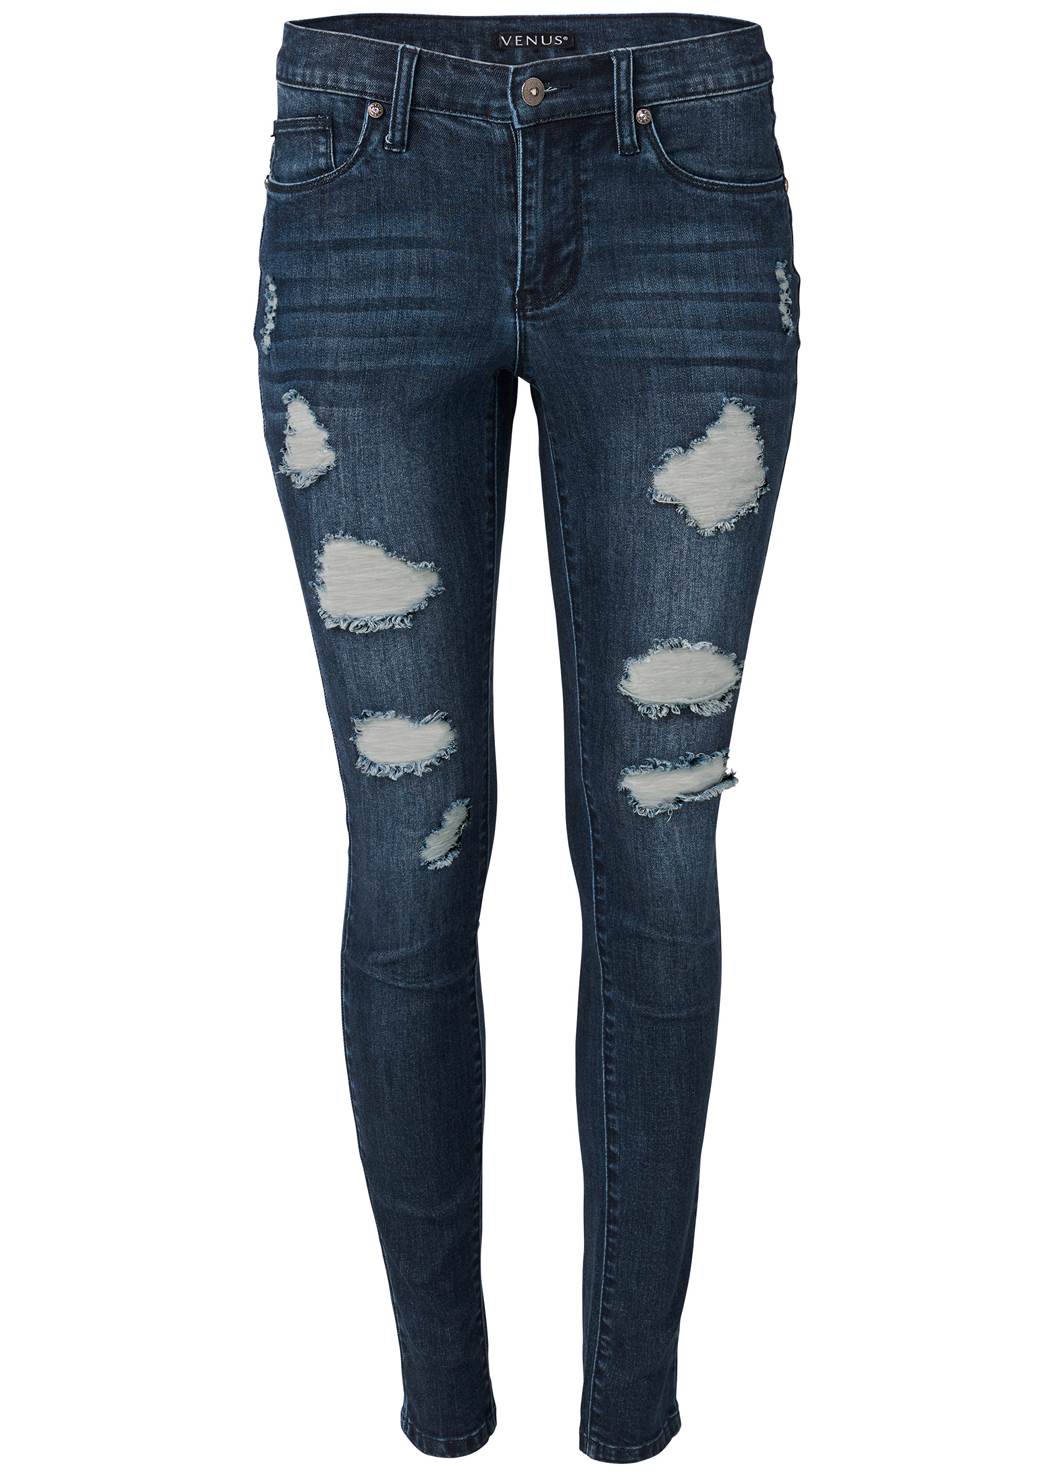 Plus Size Ripped Skinny Jeans in Dark Wash | VENUS